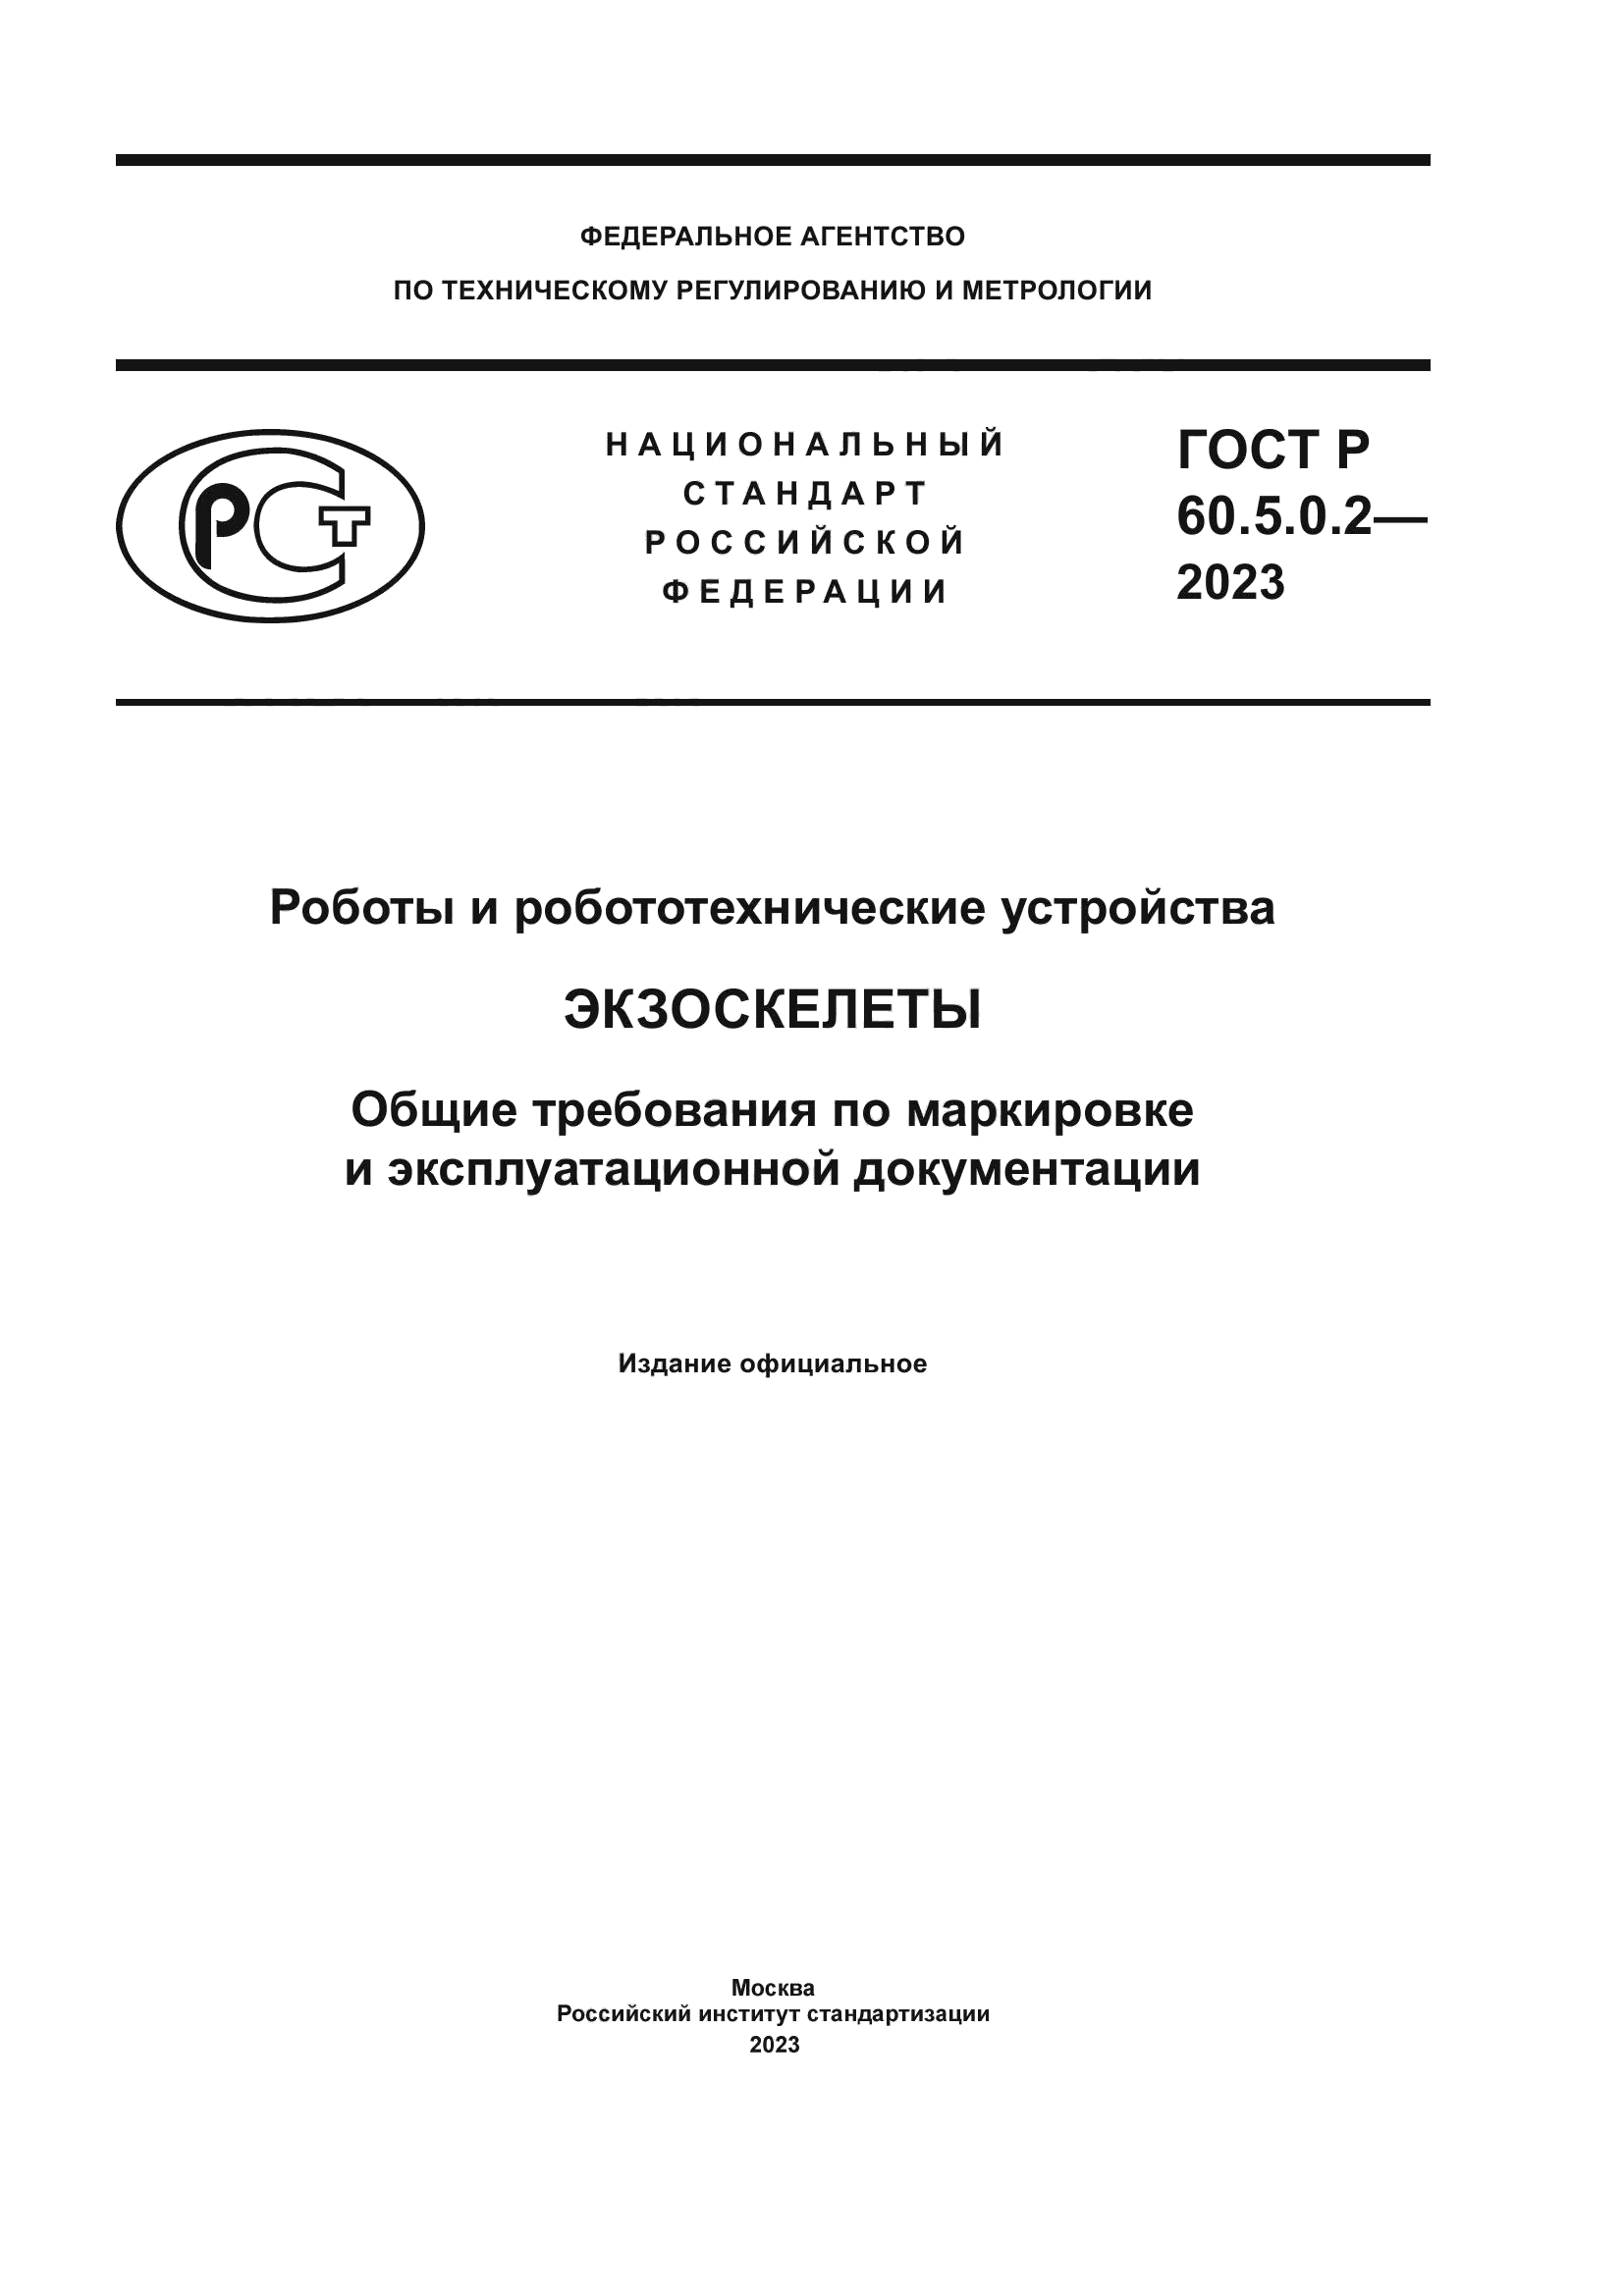 ГОСТ Р 60.5.0.2-2023